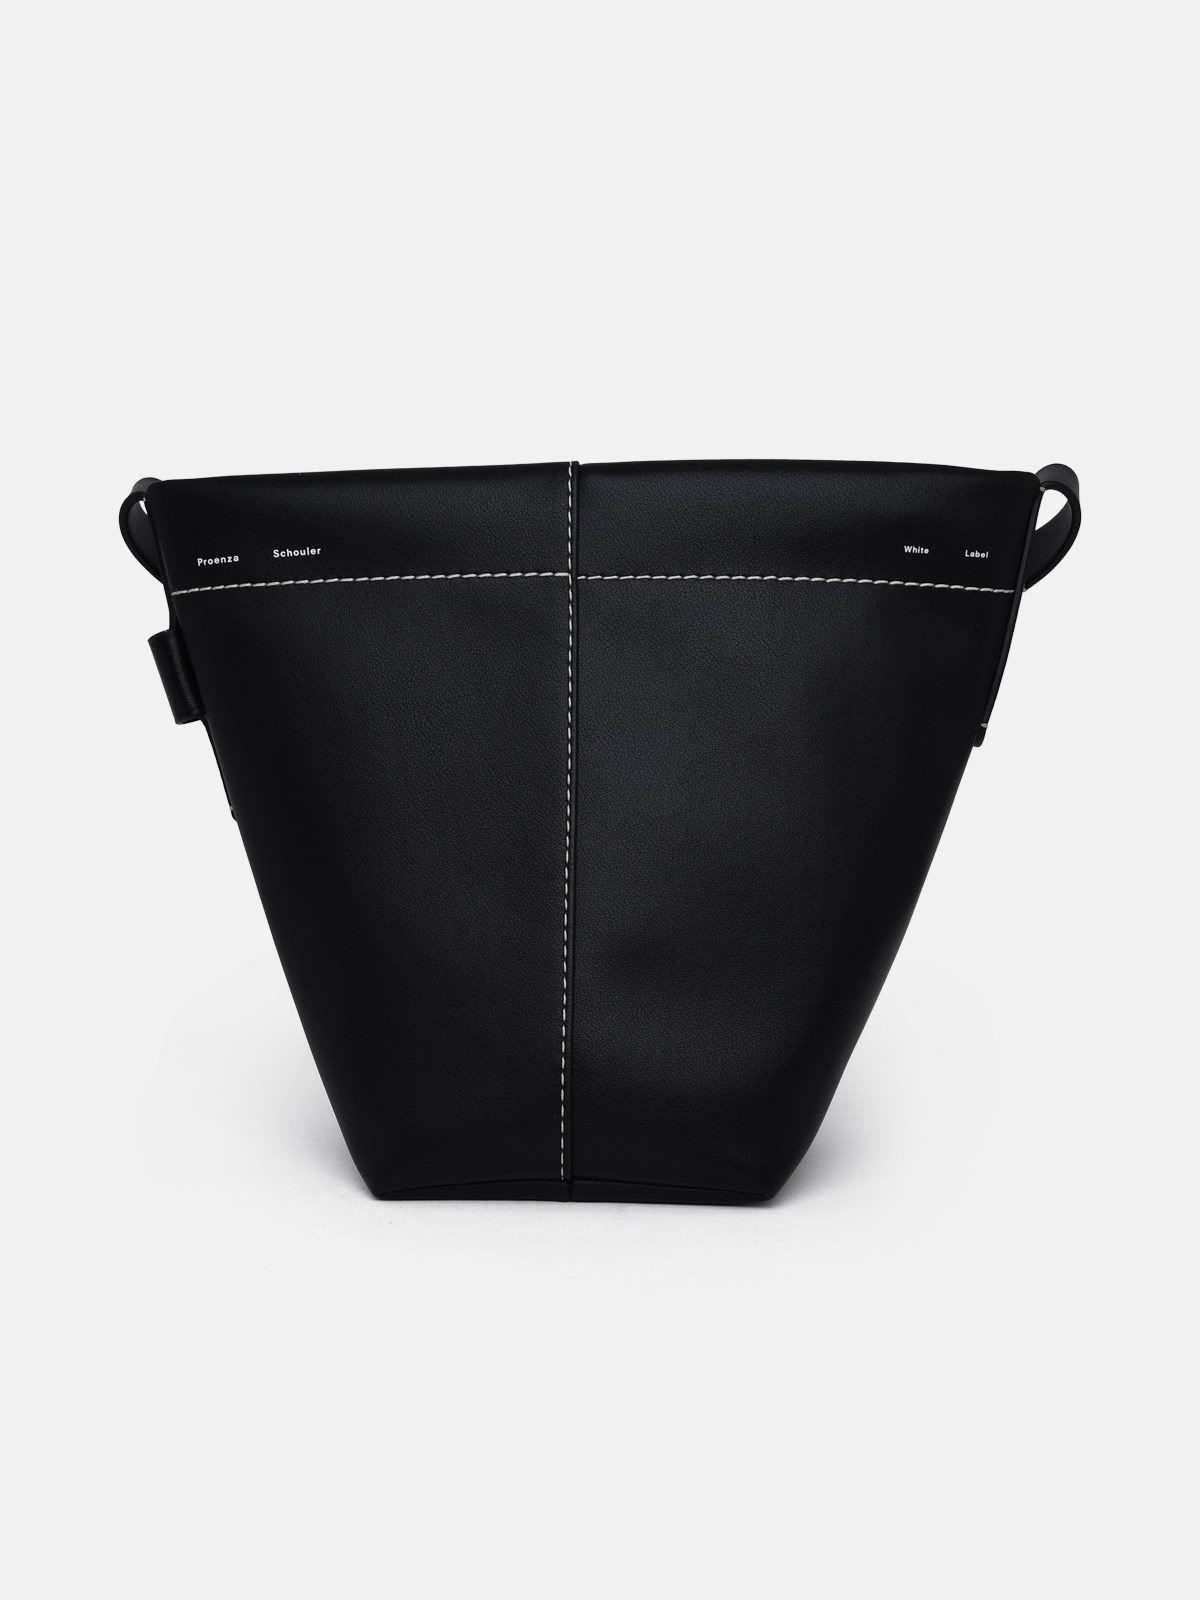 Proenza Schouler White Label Mini Barrow Bag In Black Leather